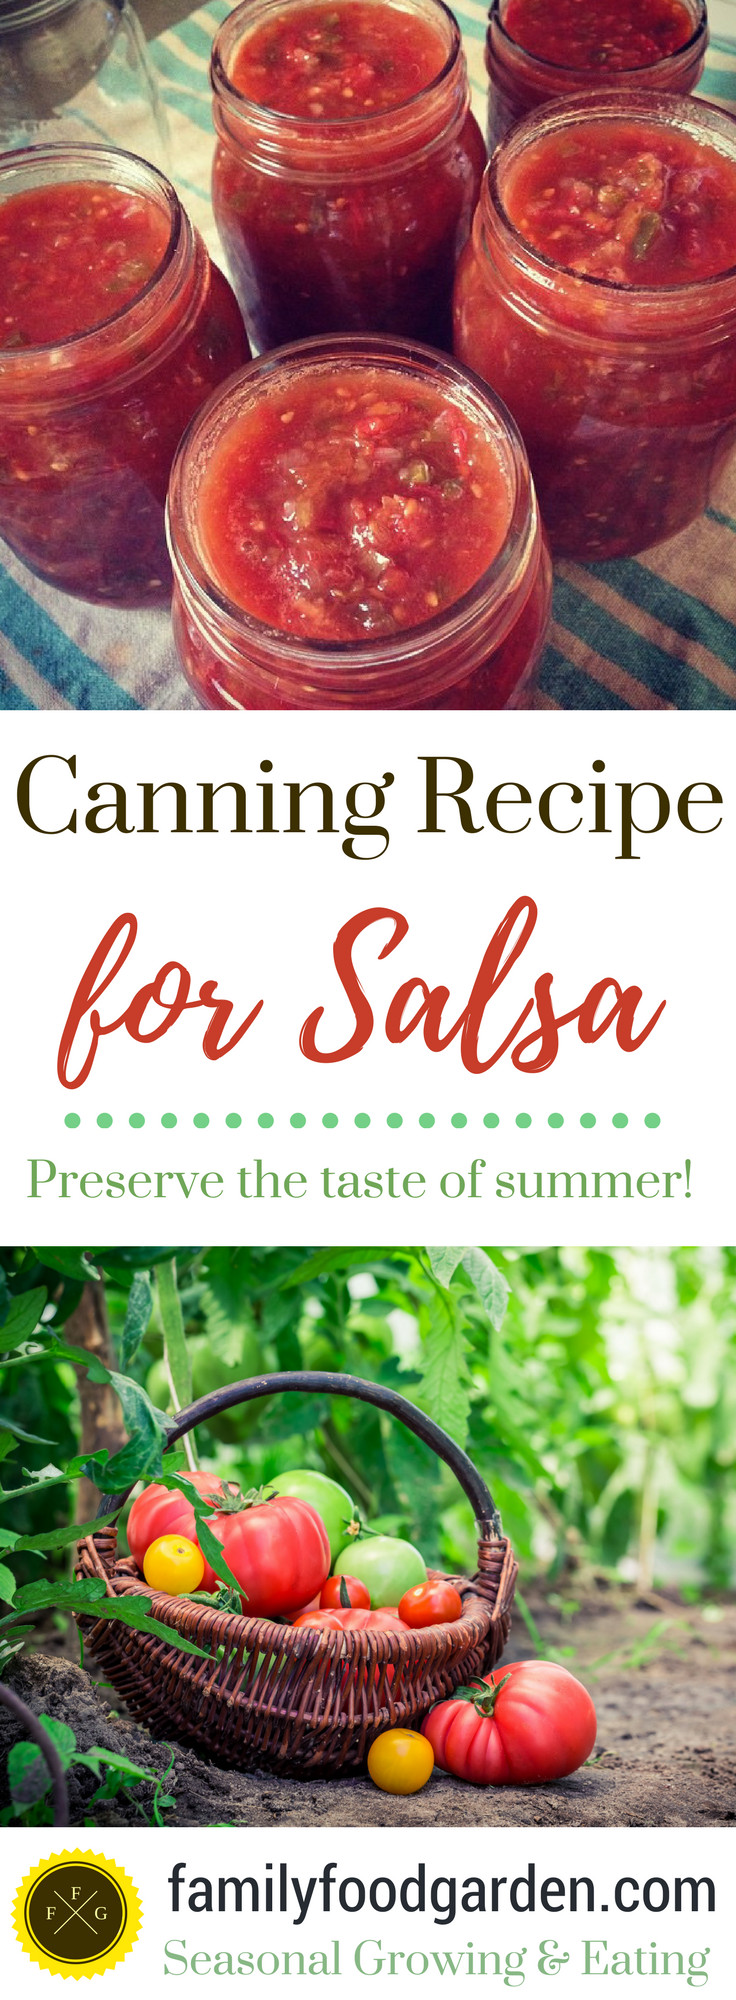 Hot Salsa Recipe For Canning
 Basic Tomato Salsa Recipe